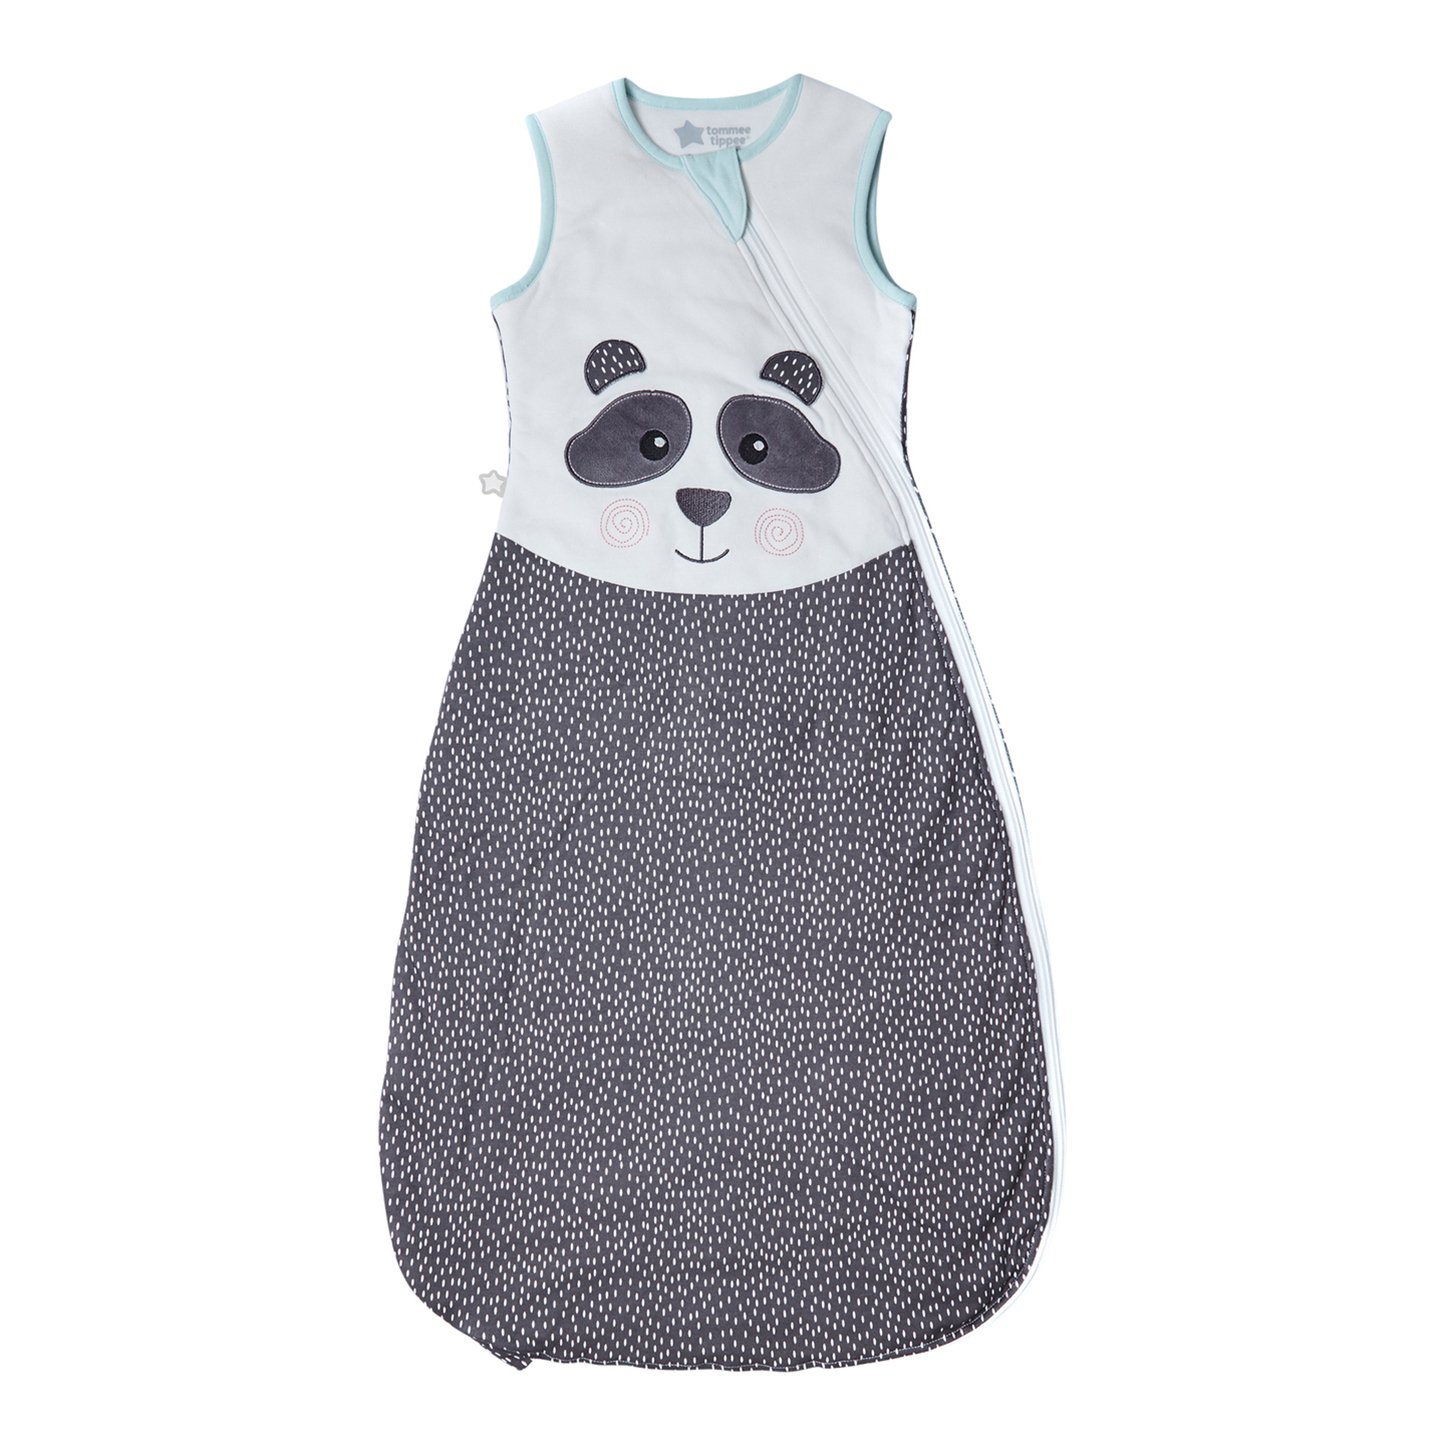 Tommee Tippee Baby Sleep Bag, 18-36m, 2.5 Tog, Pip the Panda Review